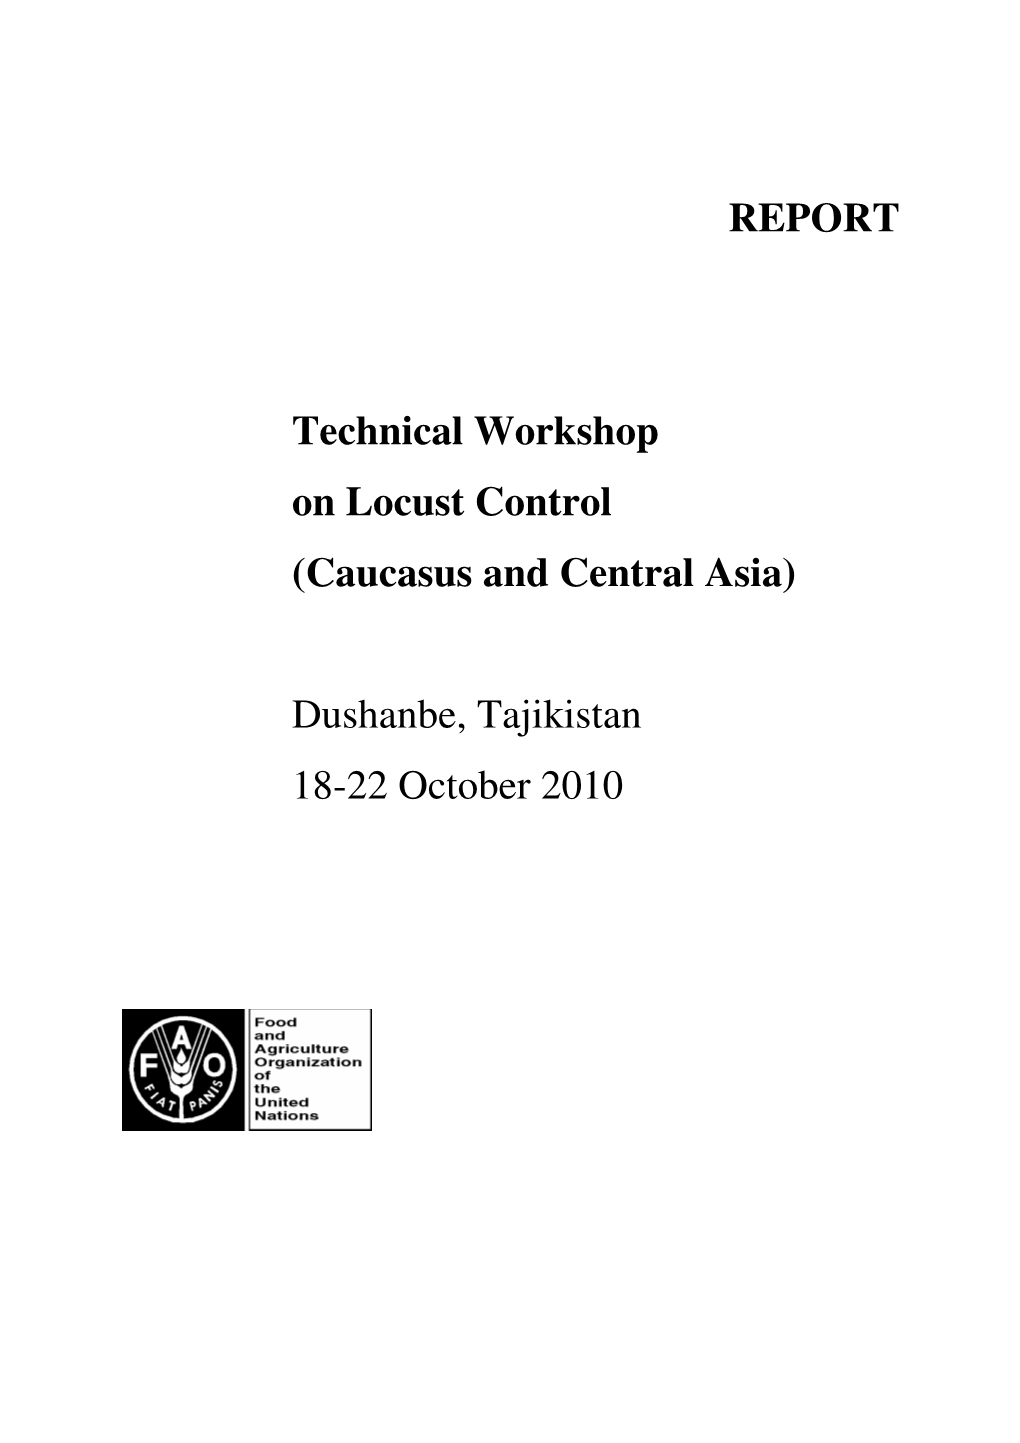 REPORT Technical Workshop on Locust Control (Caucasus And